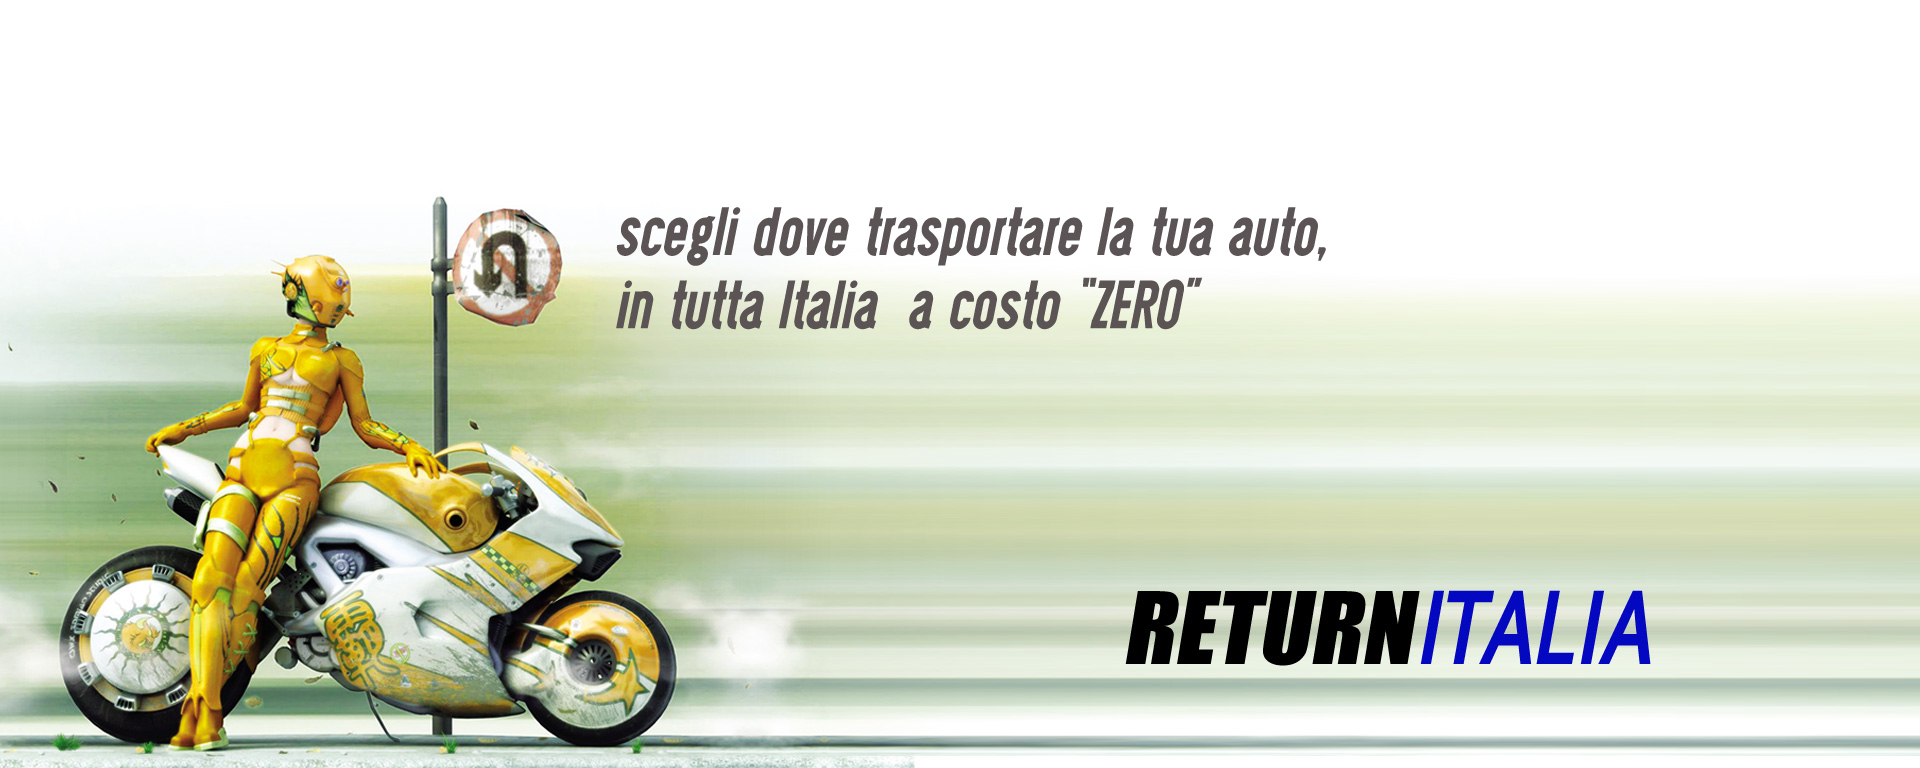 Return Italia